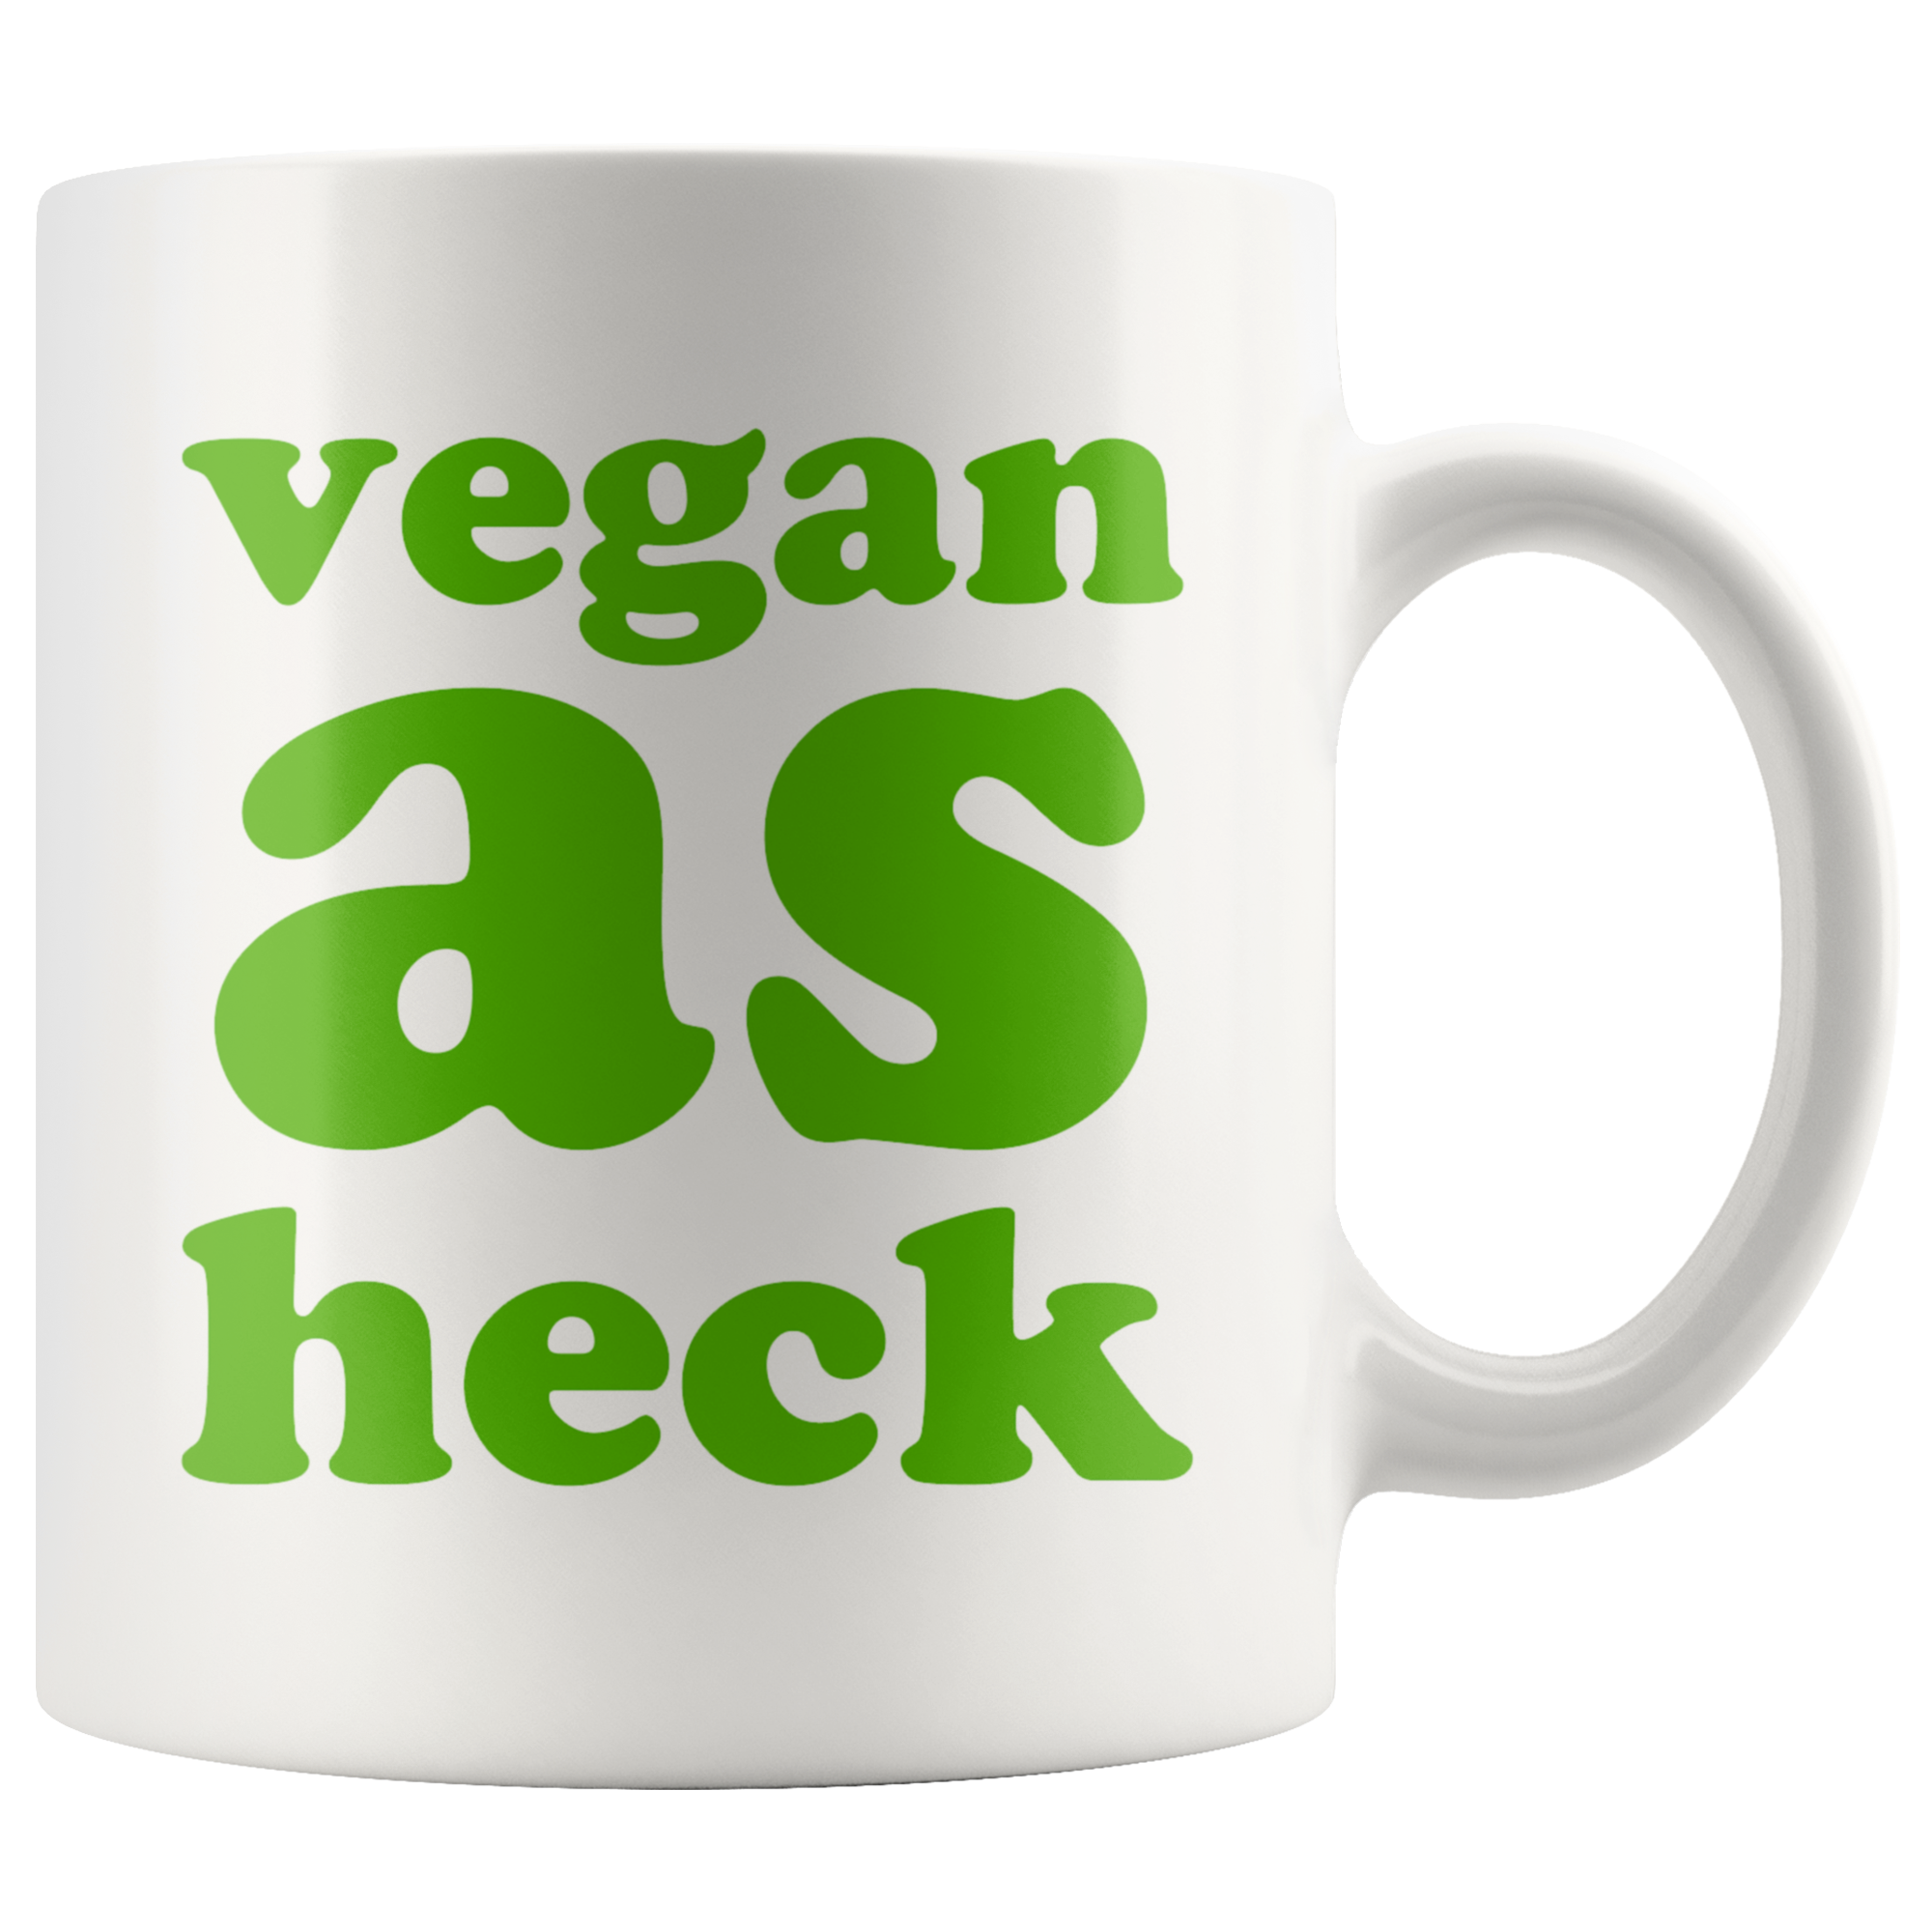 Vegan as heck mug - Guestbookery